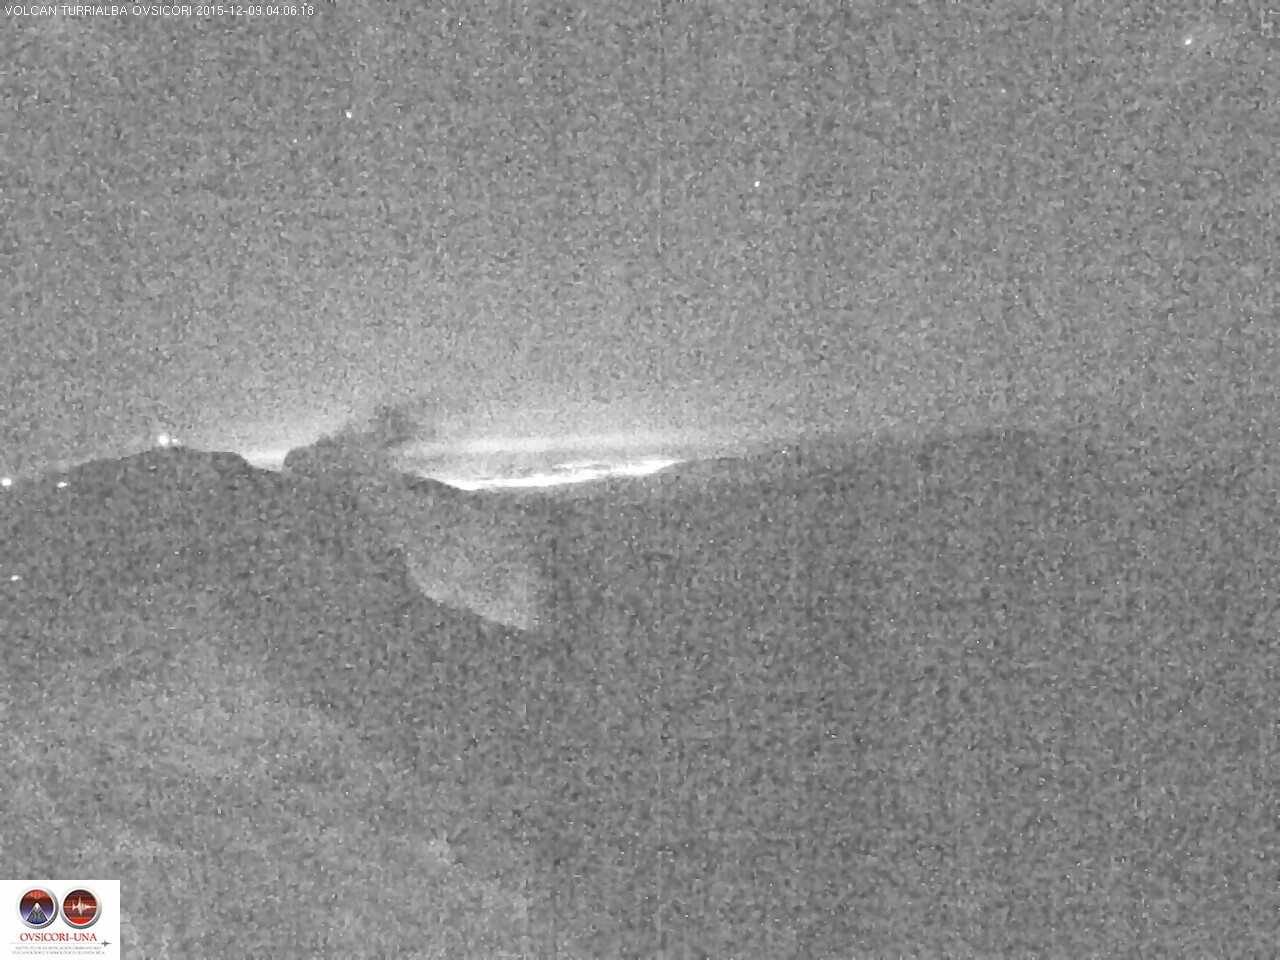 Weak glow at Turrialba's crater this morning